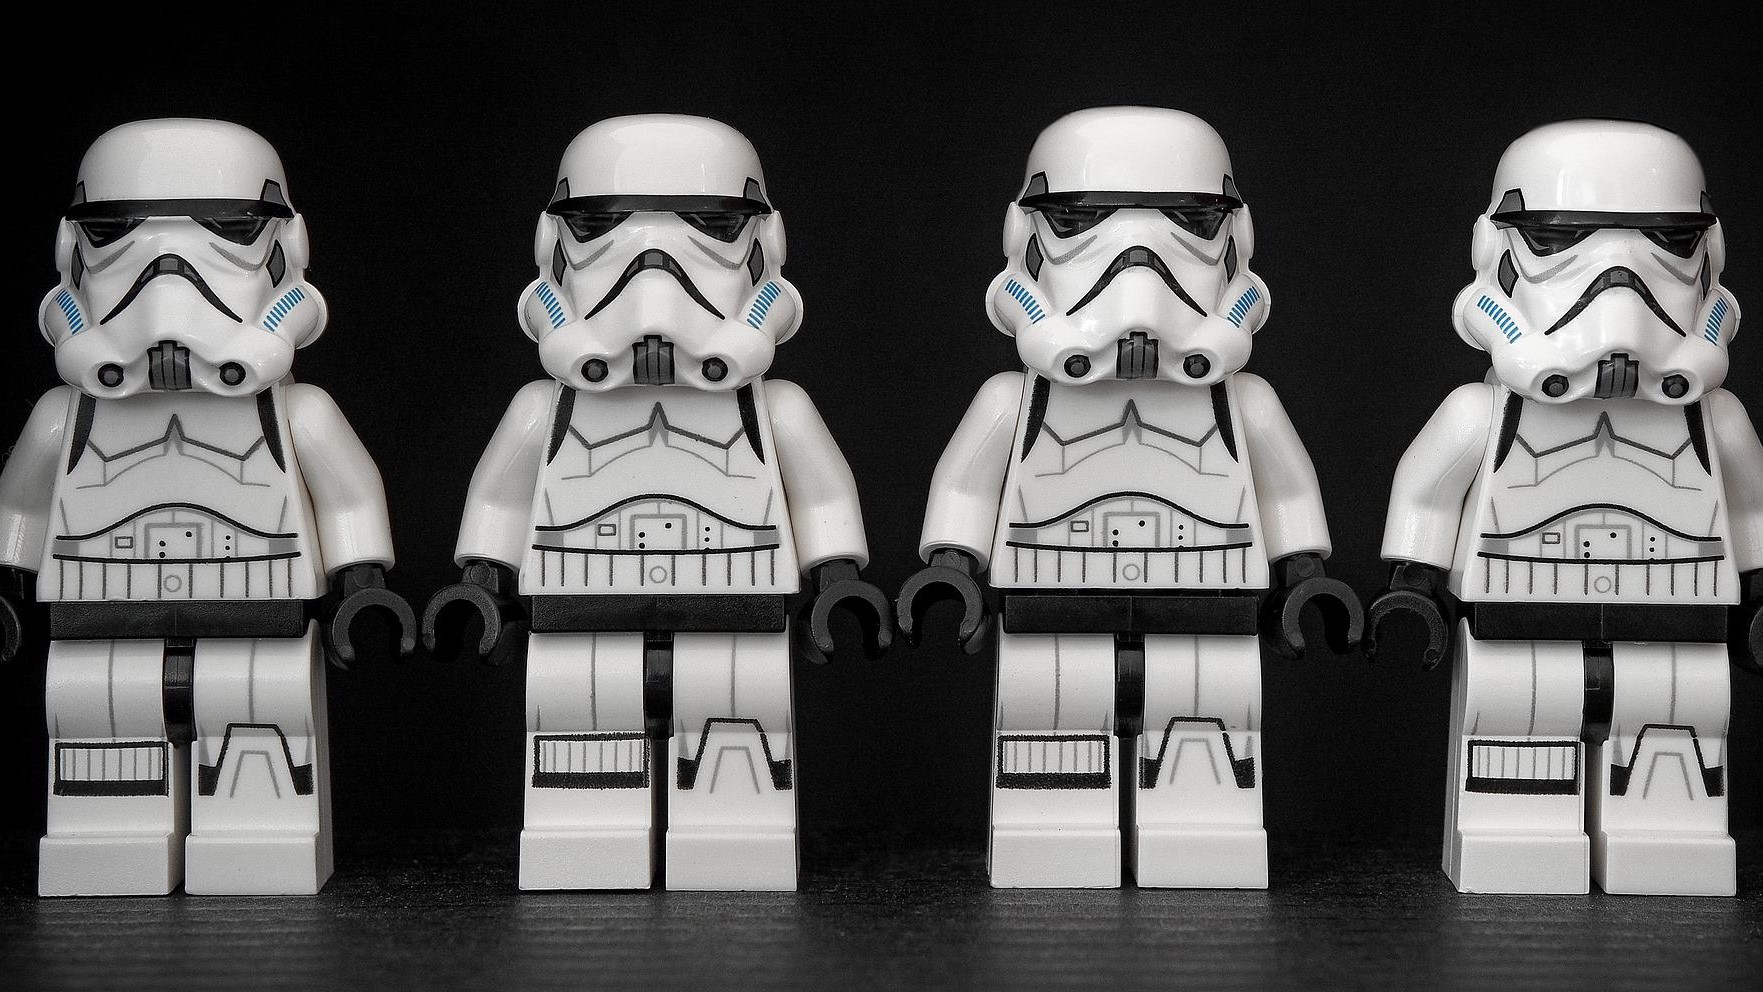 Sith Clones Jedi Great Mix! Lego STAR WARS GRAB BAG of 25 Minifigure Heads 